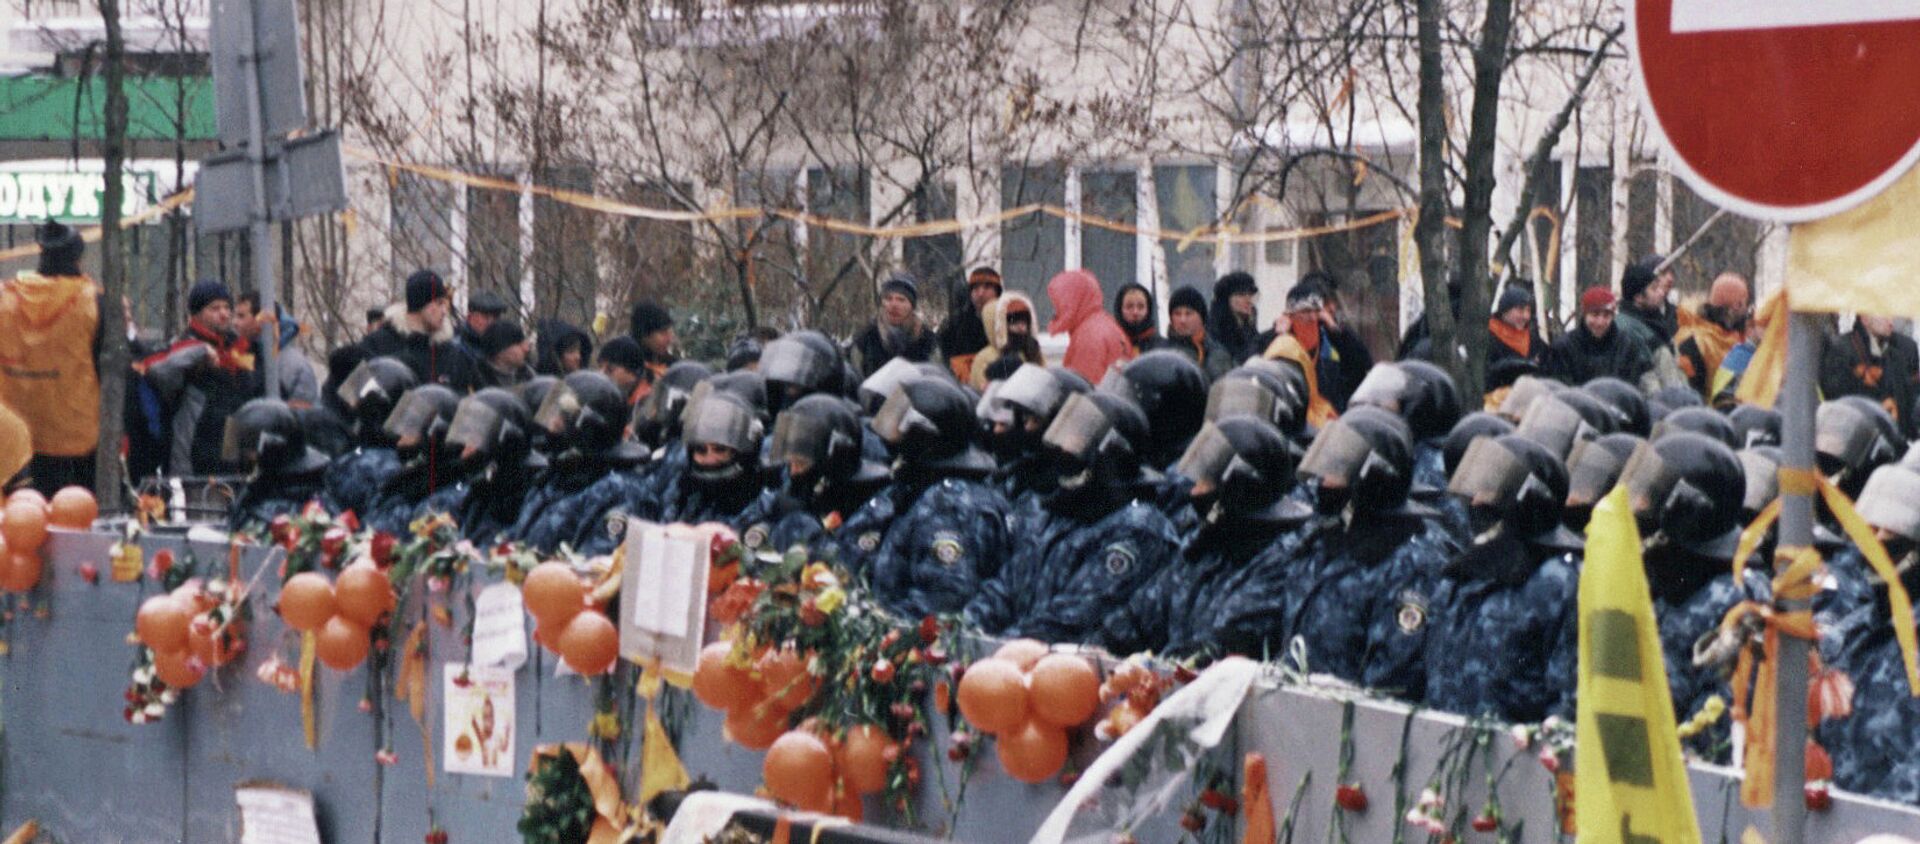 Orange Revolution, Kiev, Ukraine, 2004 - Sputnik International, 1920, 21.11.2014